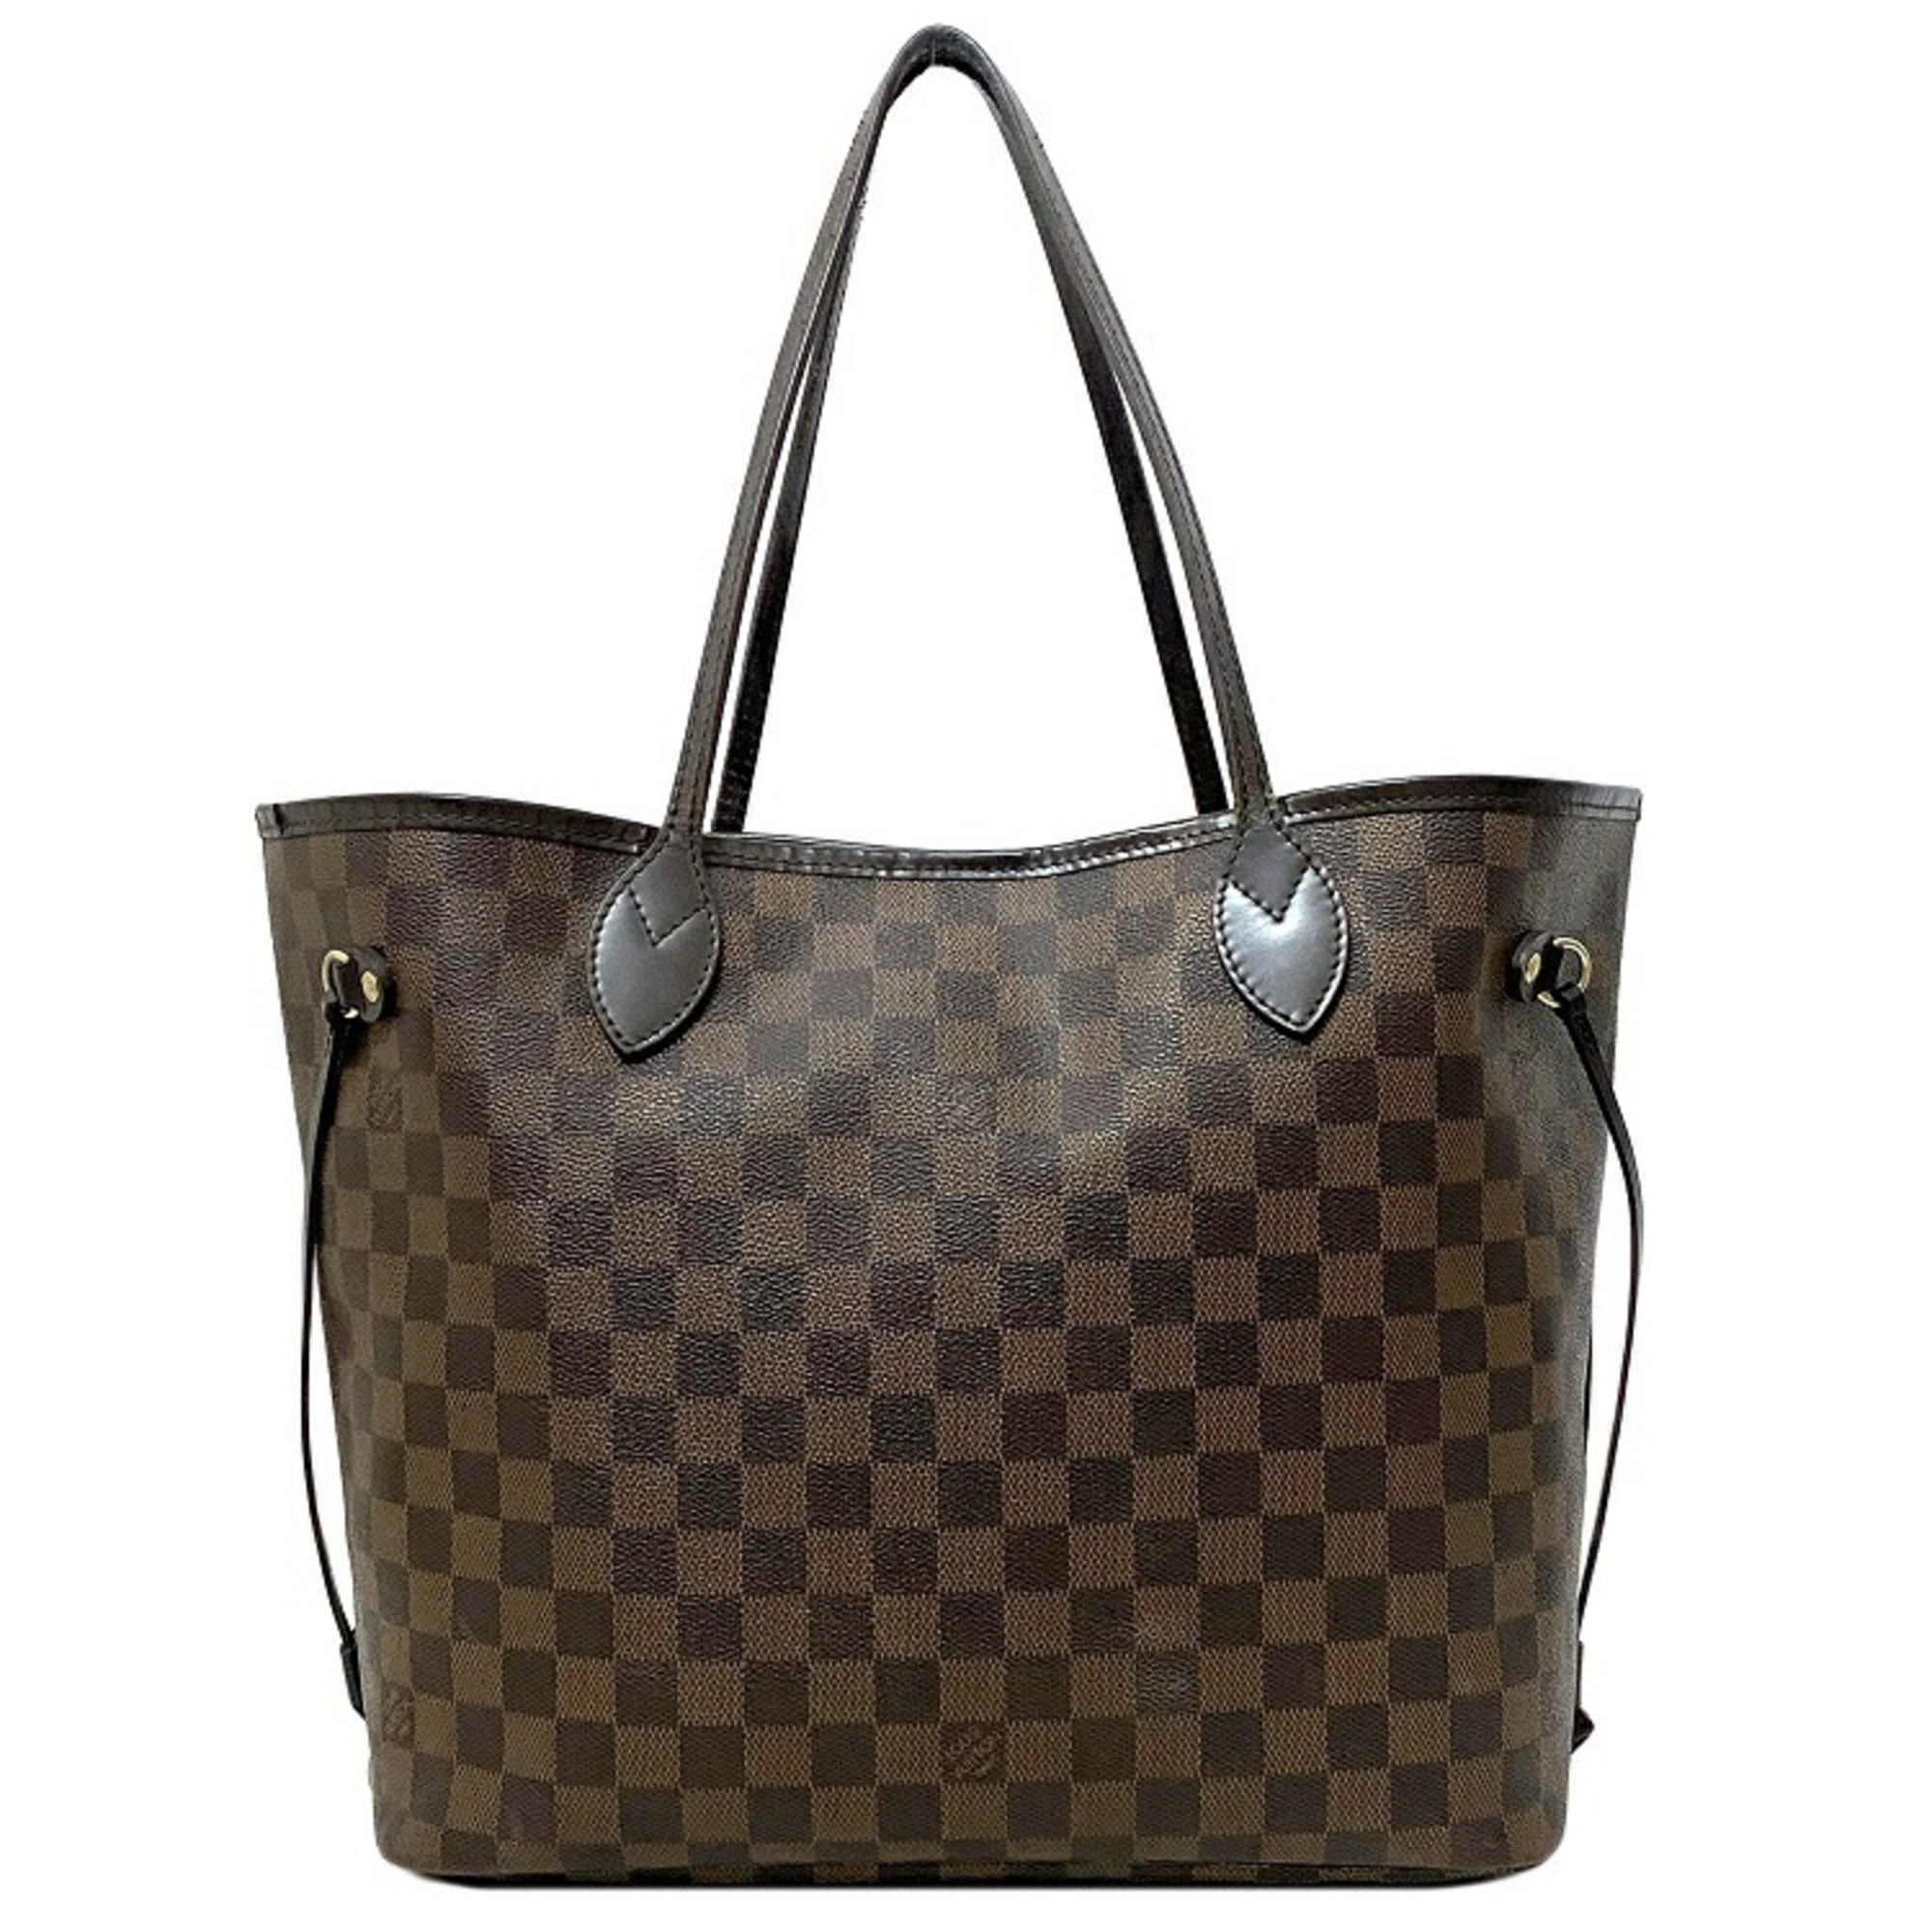 Authenticated used Louis Vuitton Tote Bag Neverfull mm Brown Damier Ebene N51105 SP4039 Louis Vuitton Ladies, Adult Unisex, Size: (HxWxD): 29cm x 32cm